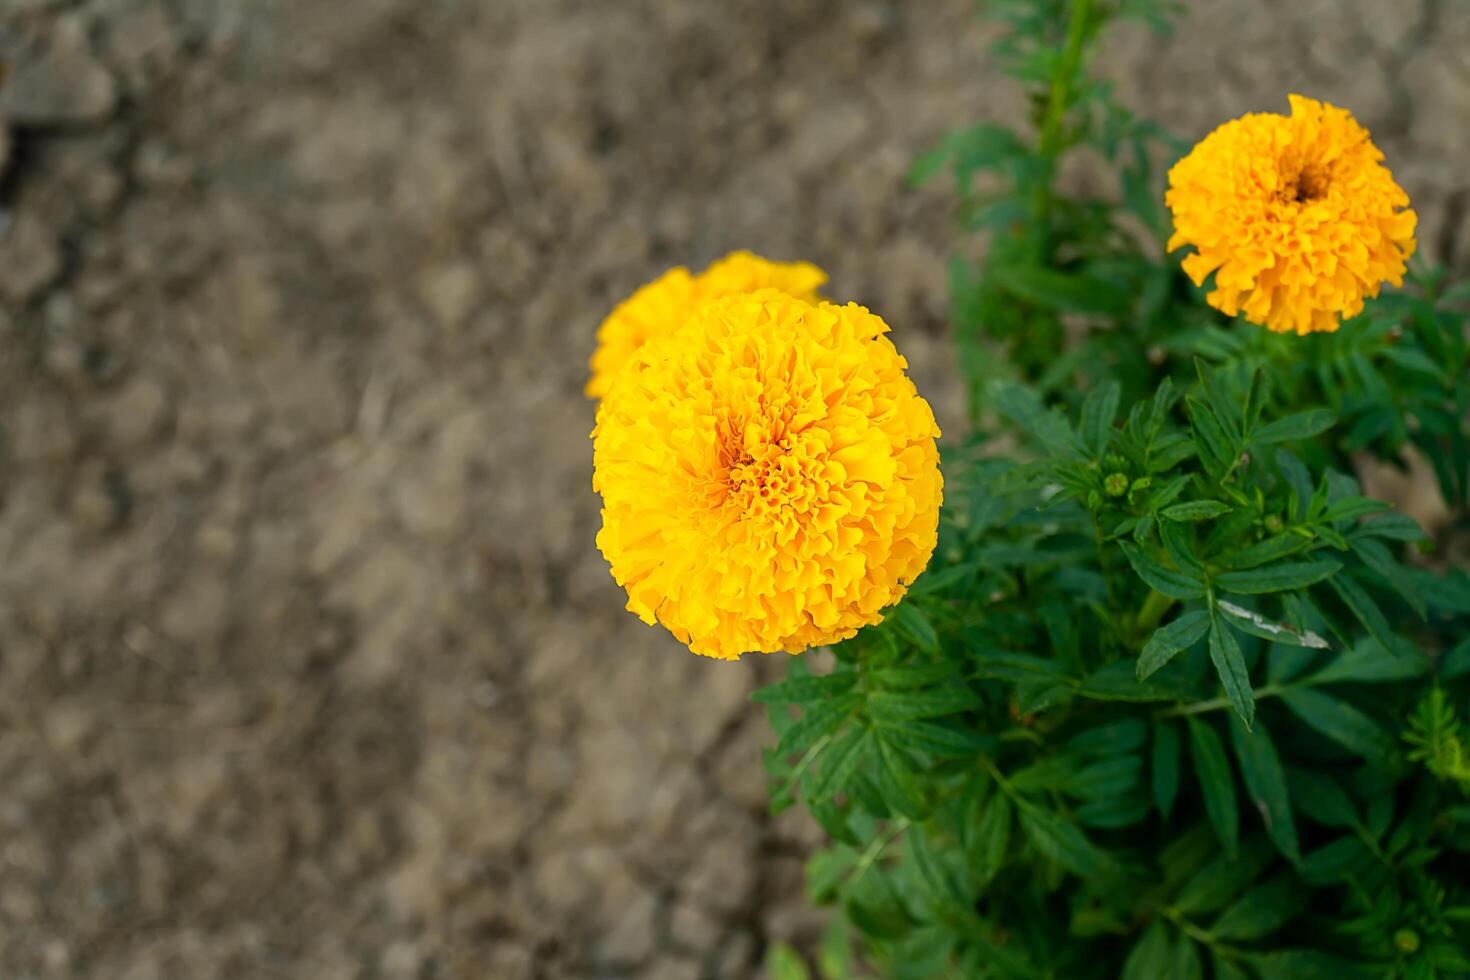 Close up marigolds flower photo